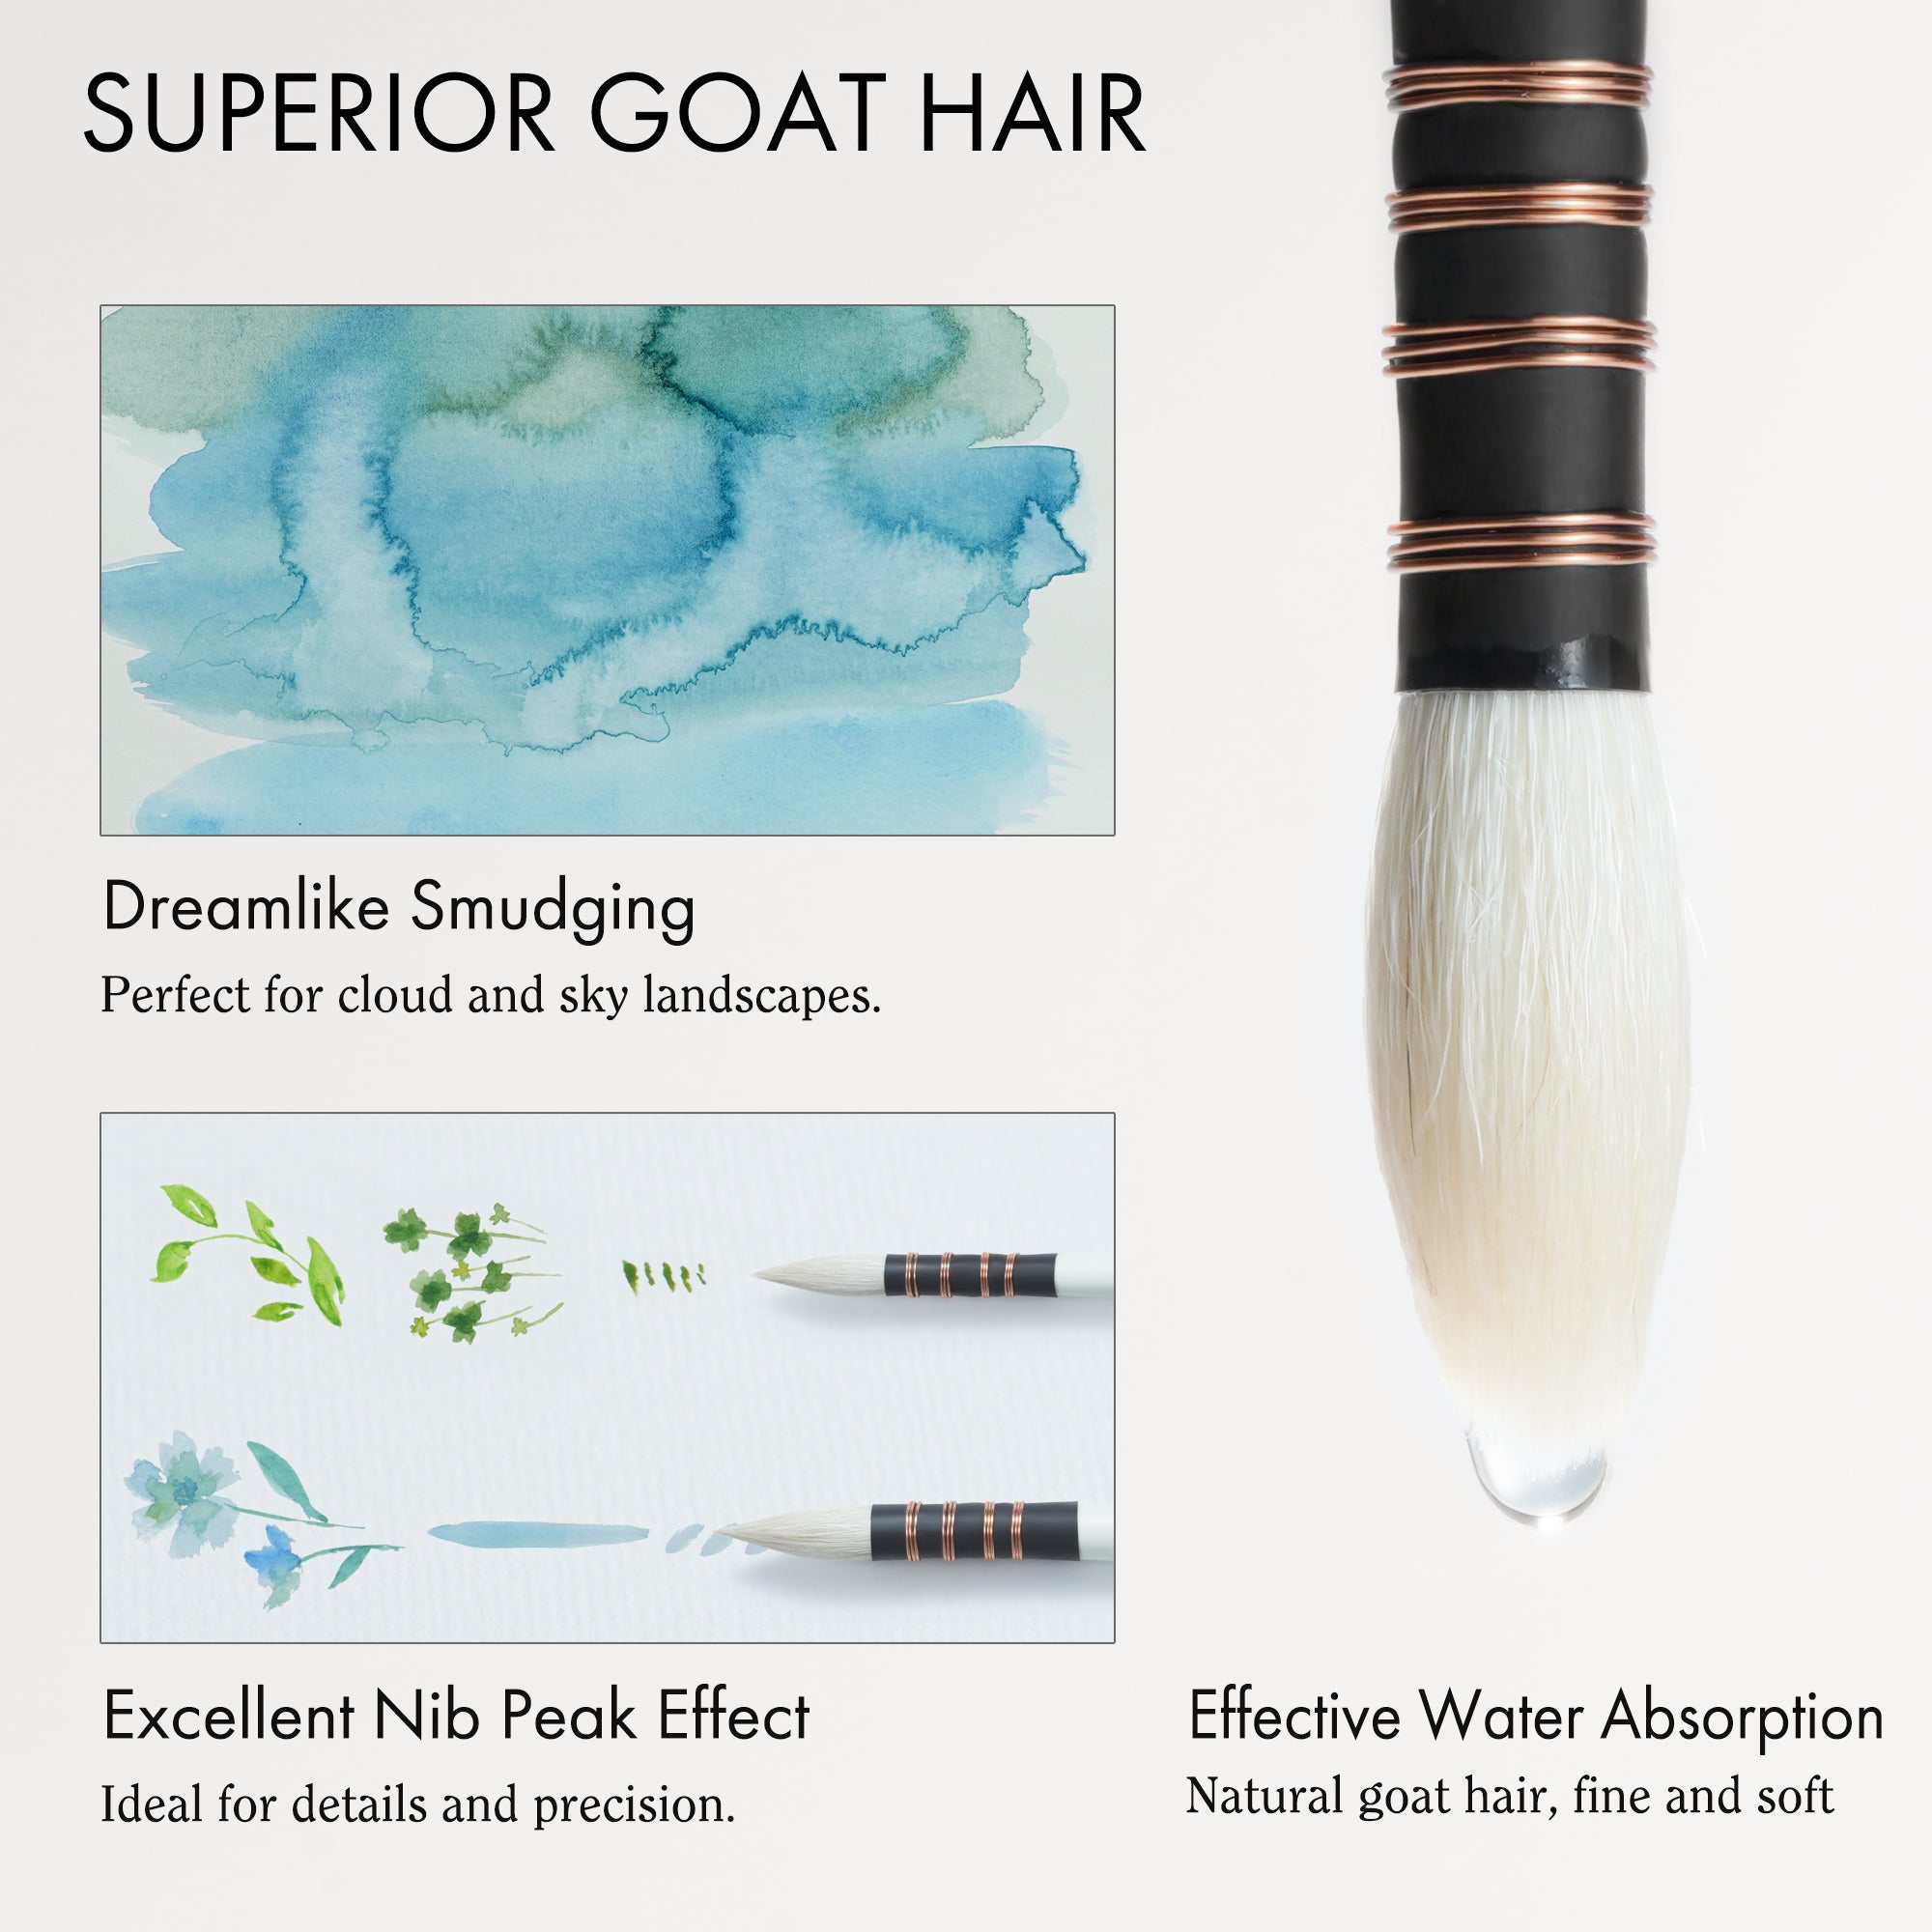 Unbranded Flat Goat Bristle Art Brushes for sale